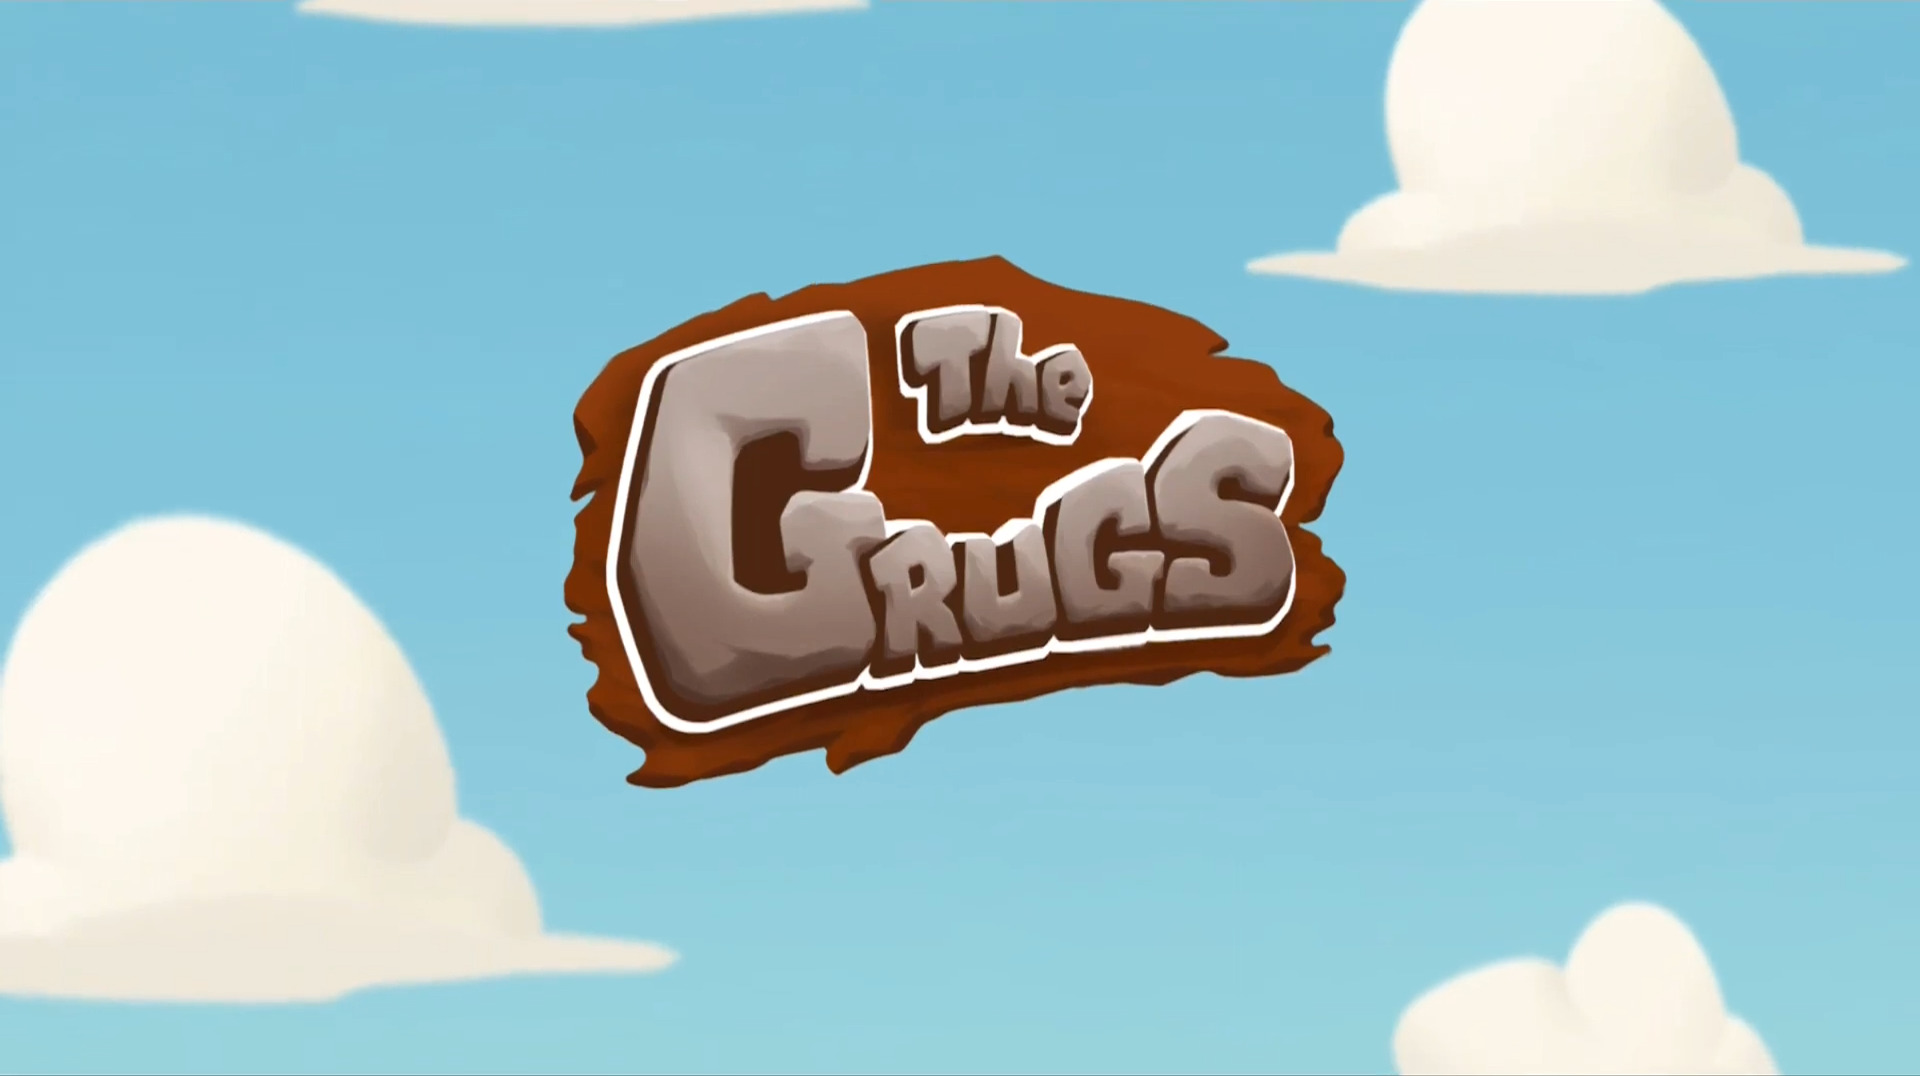 Download The Grugs: Hector's rest quest für Android kostenlos.